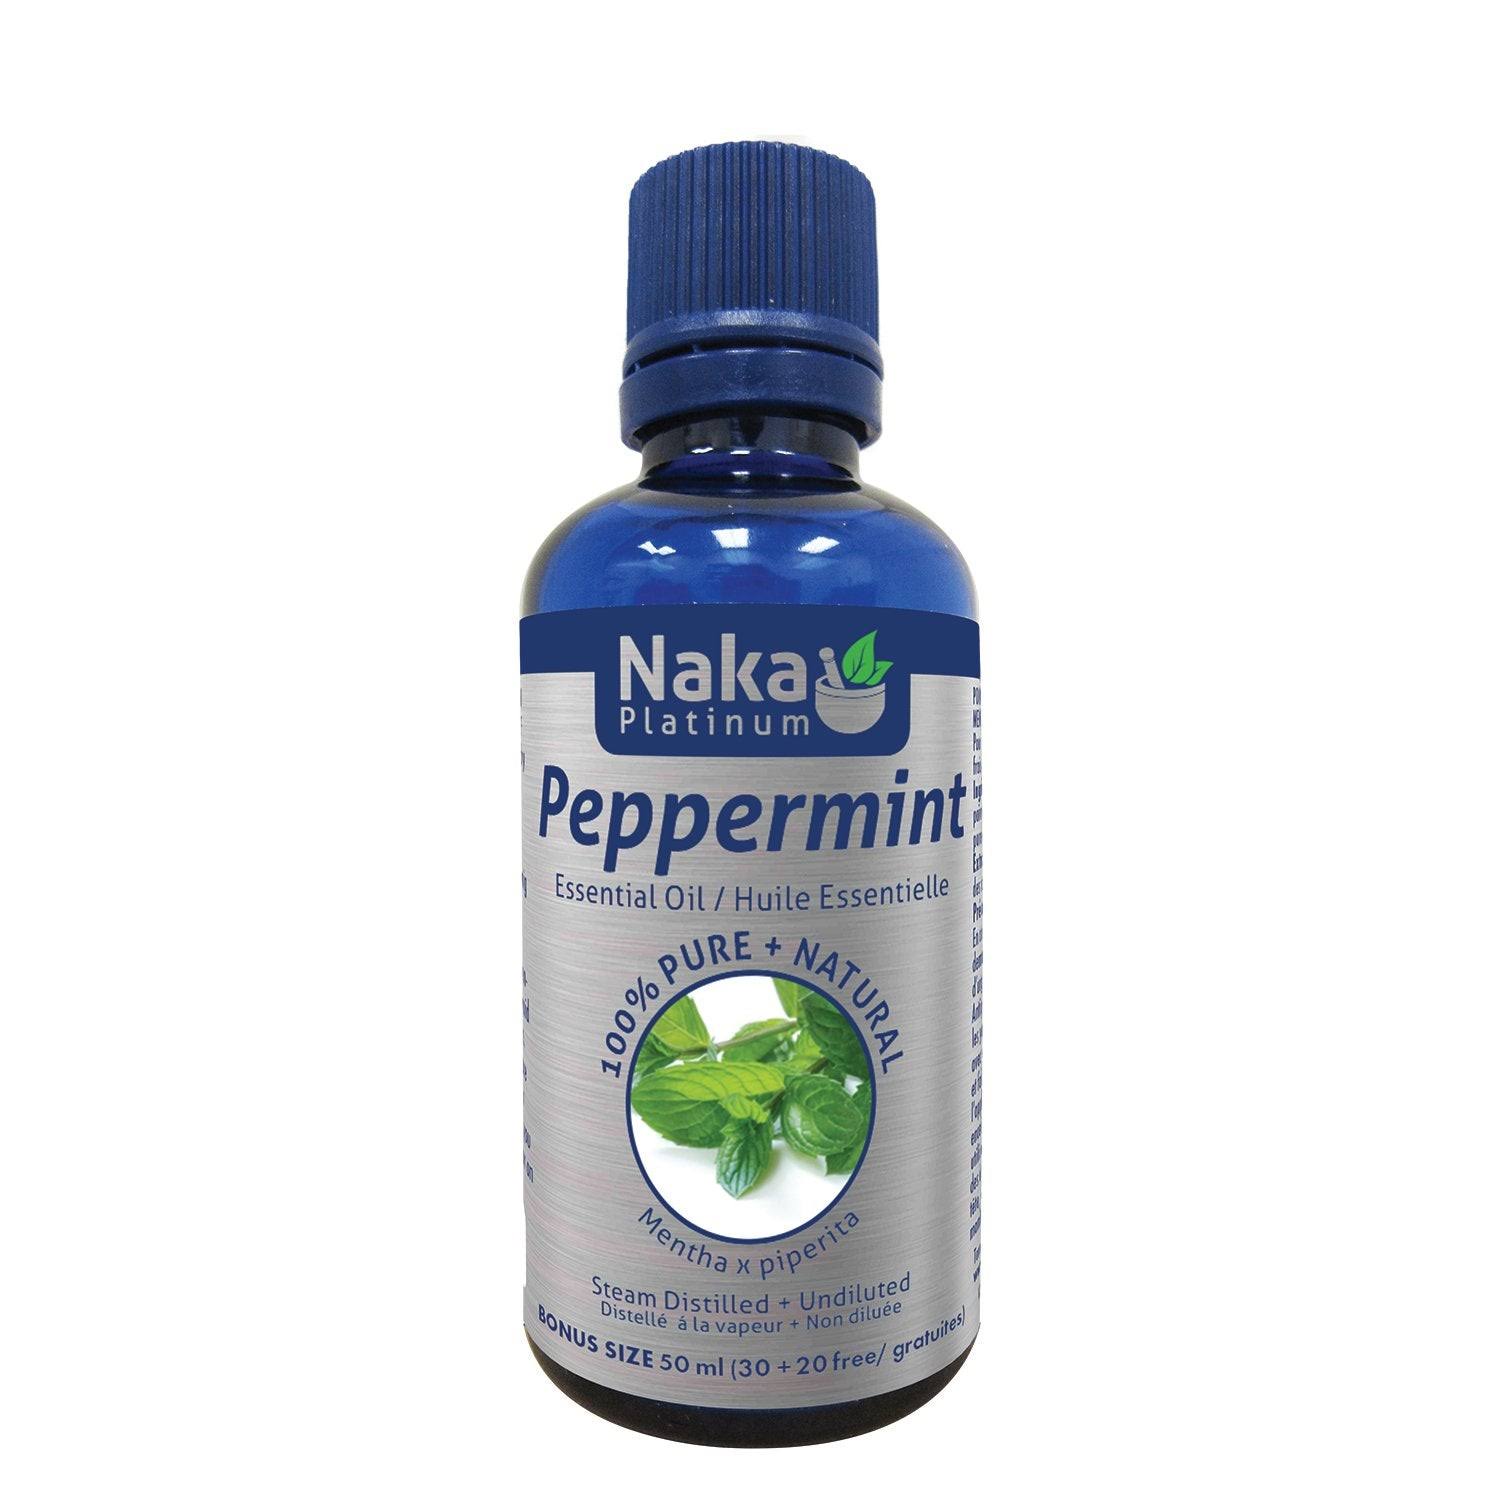 Naka Platinum Peppermint Essential Oil, 50ml